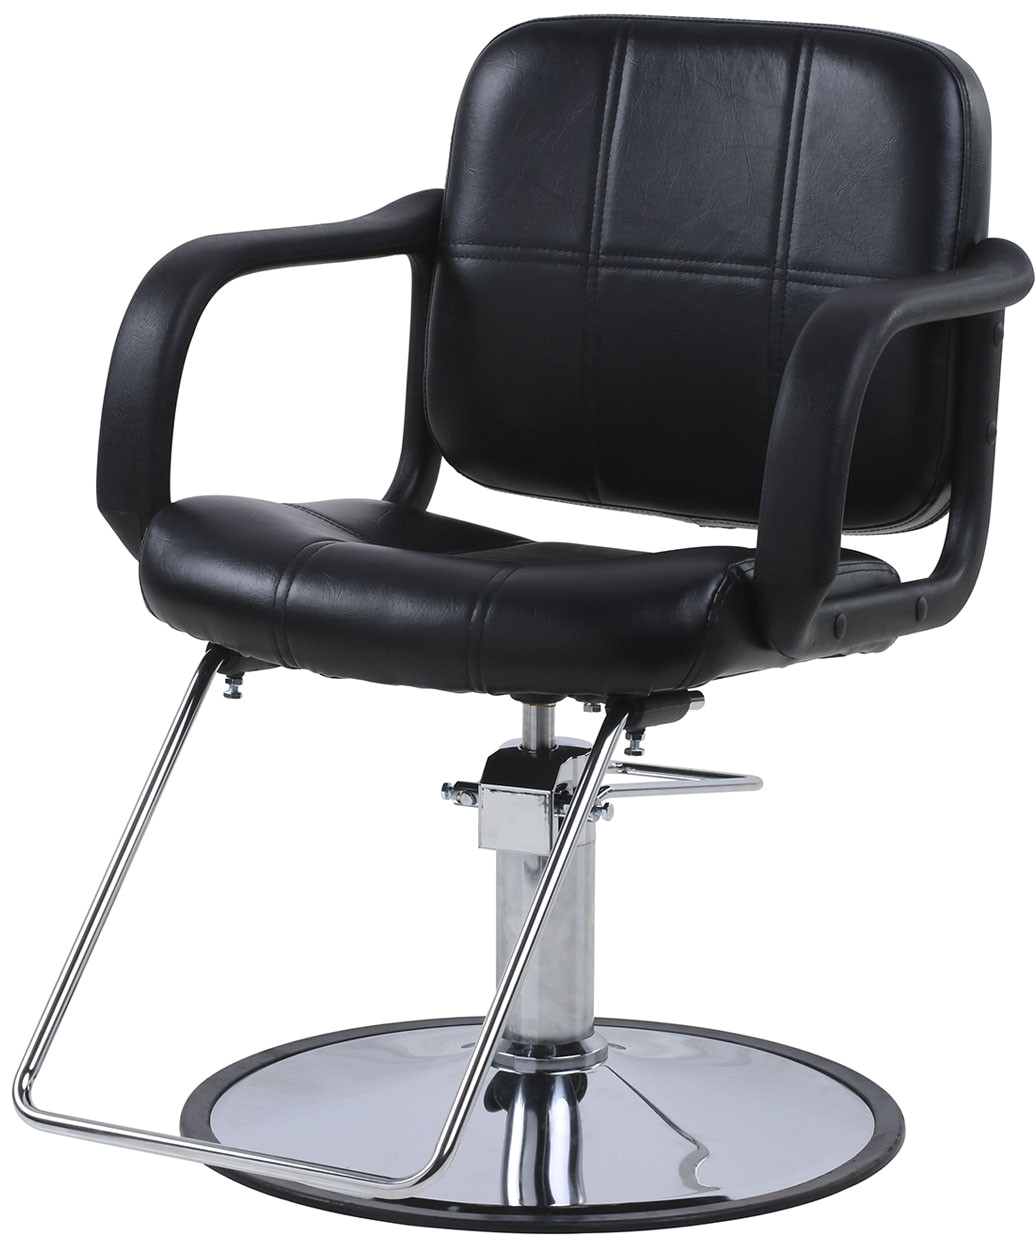 Hair Salon Shampoo Chair for Sale Hydraulic Salon Styling Chair Chris Styling Chair Pump